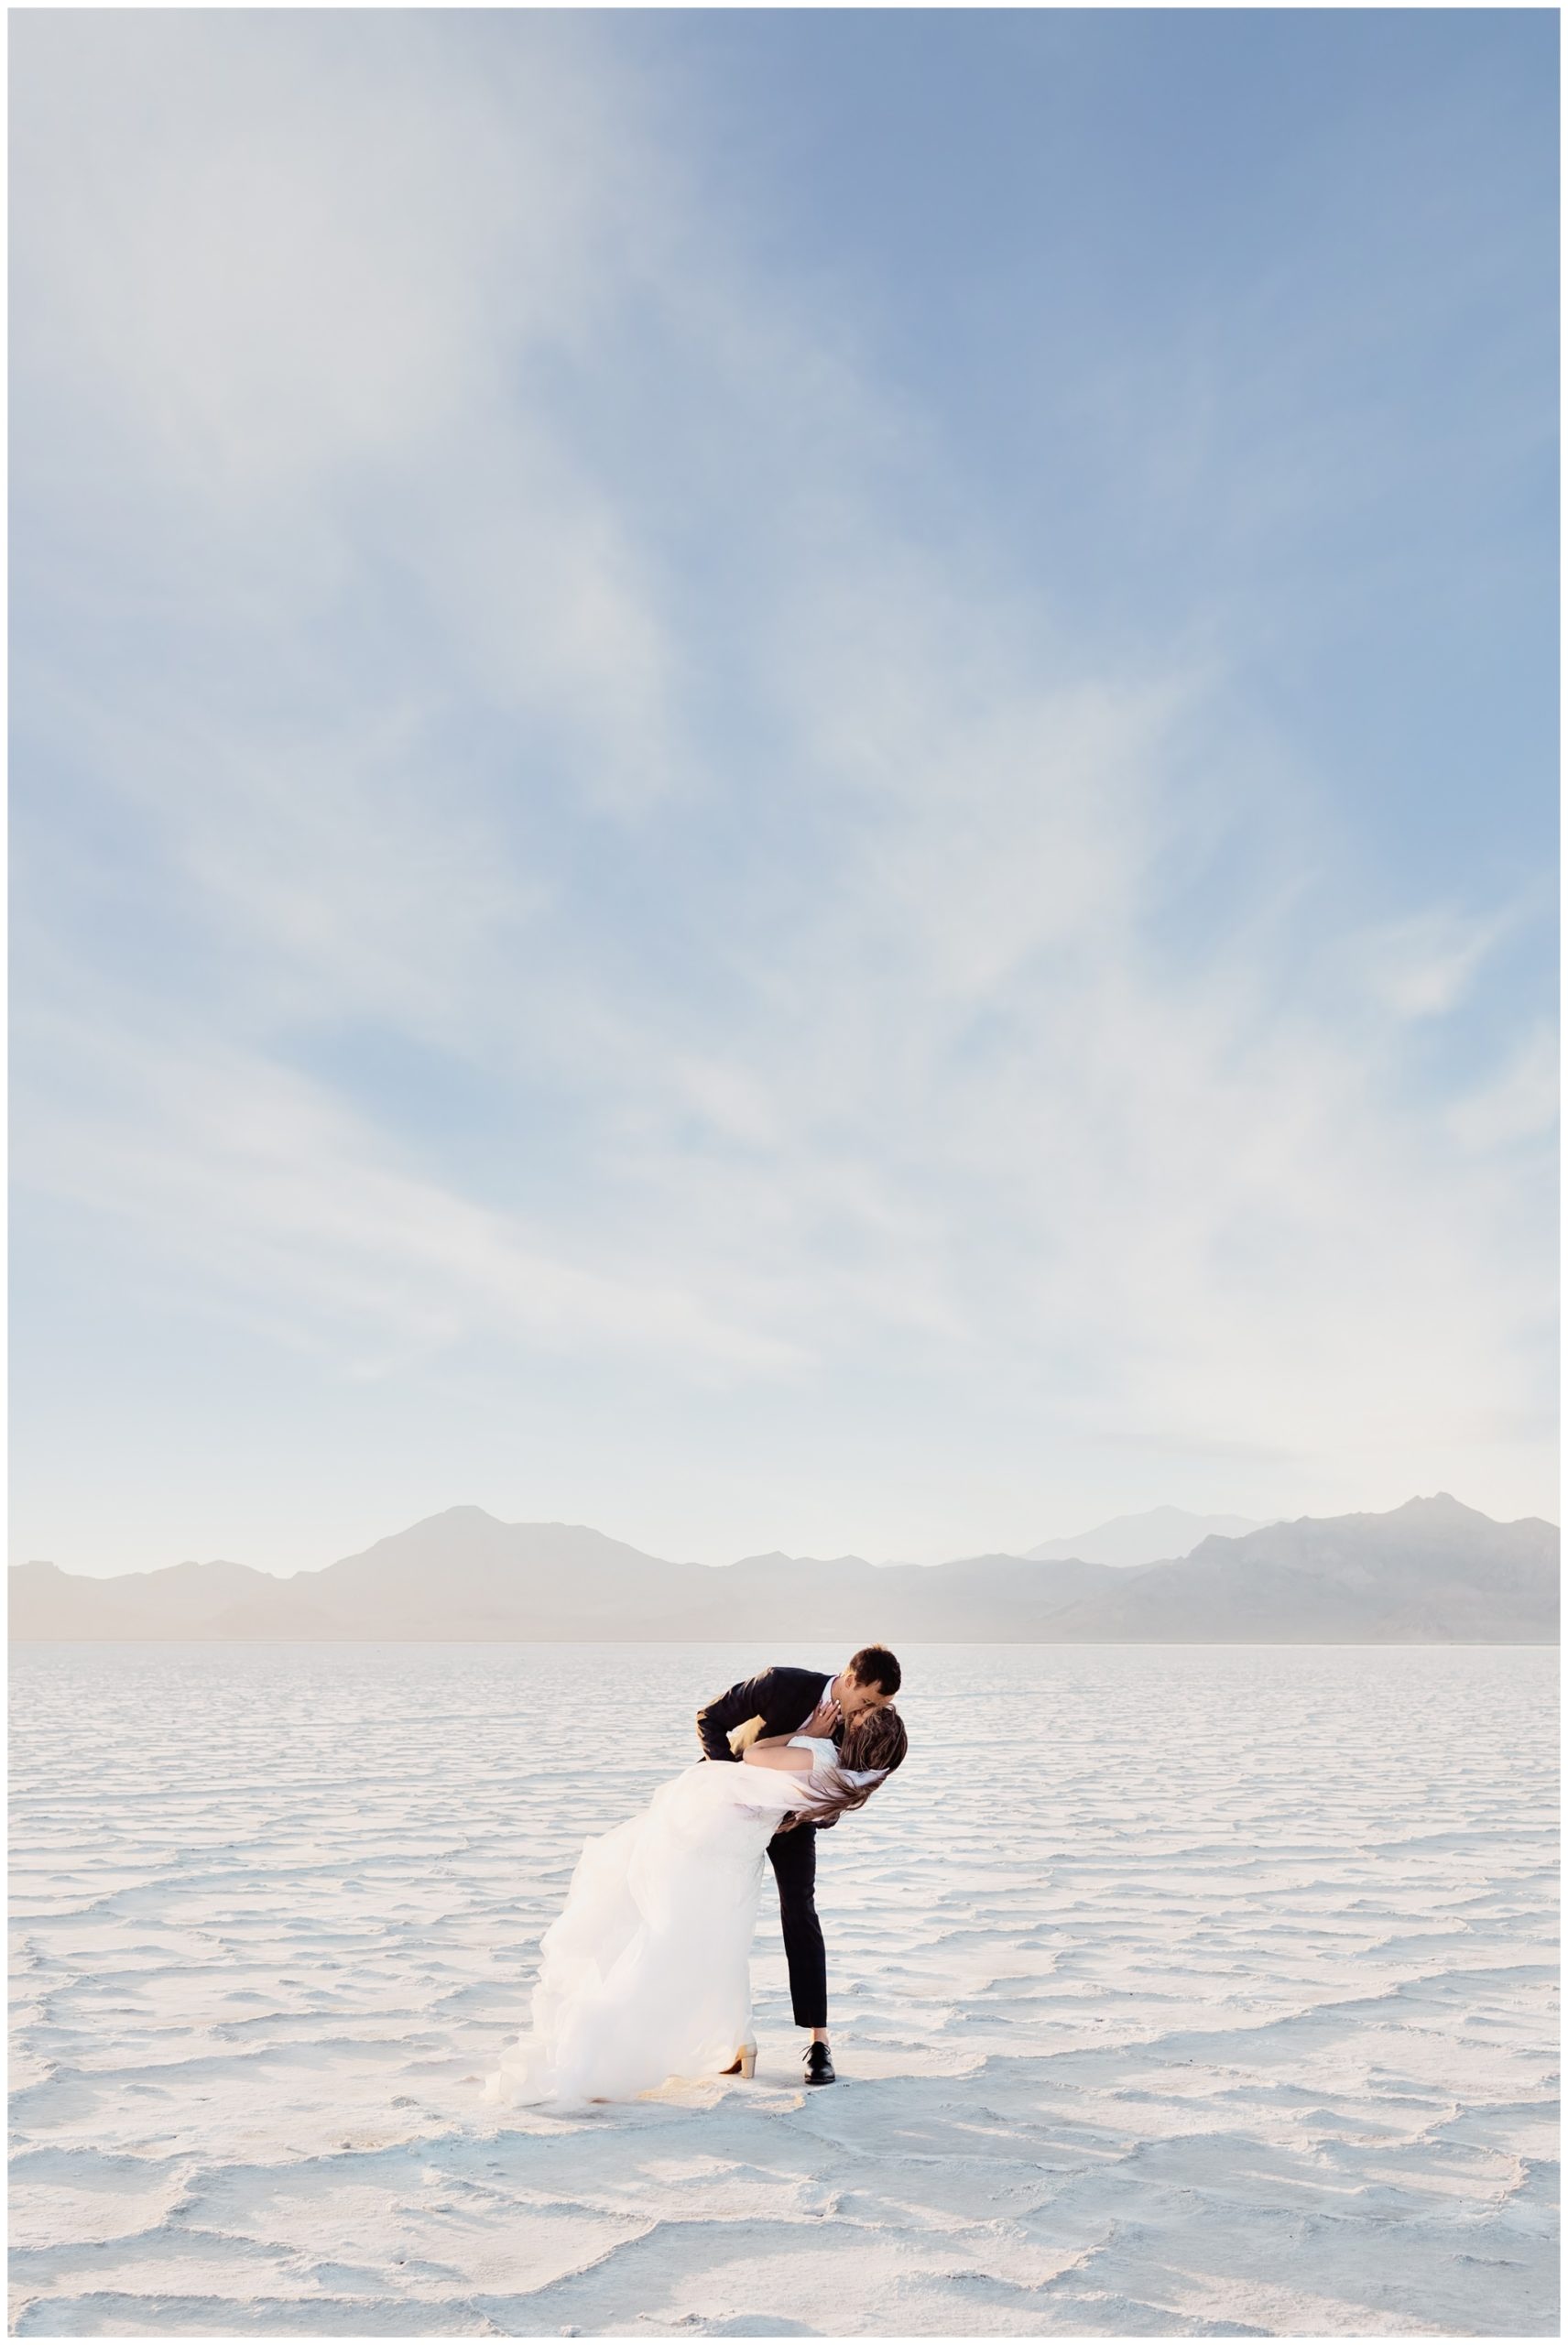 Groom dipping the bride for a quick kiss near Salt Lake city Salt Flats